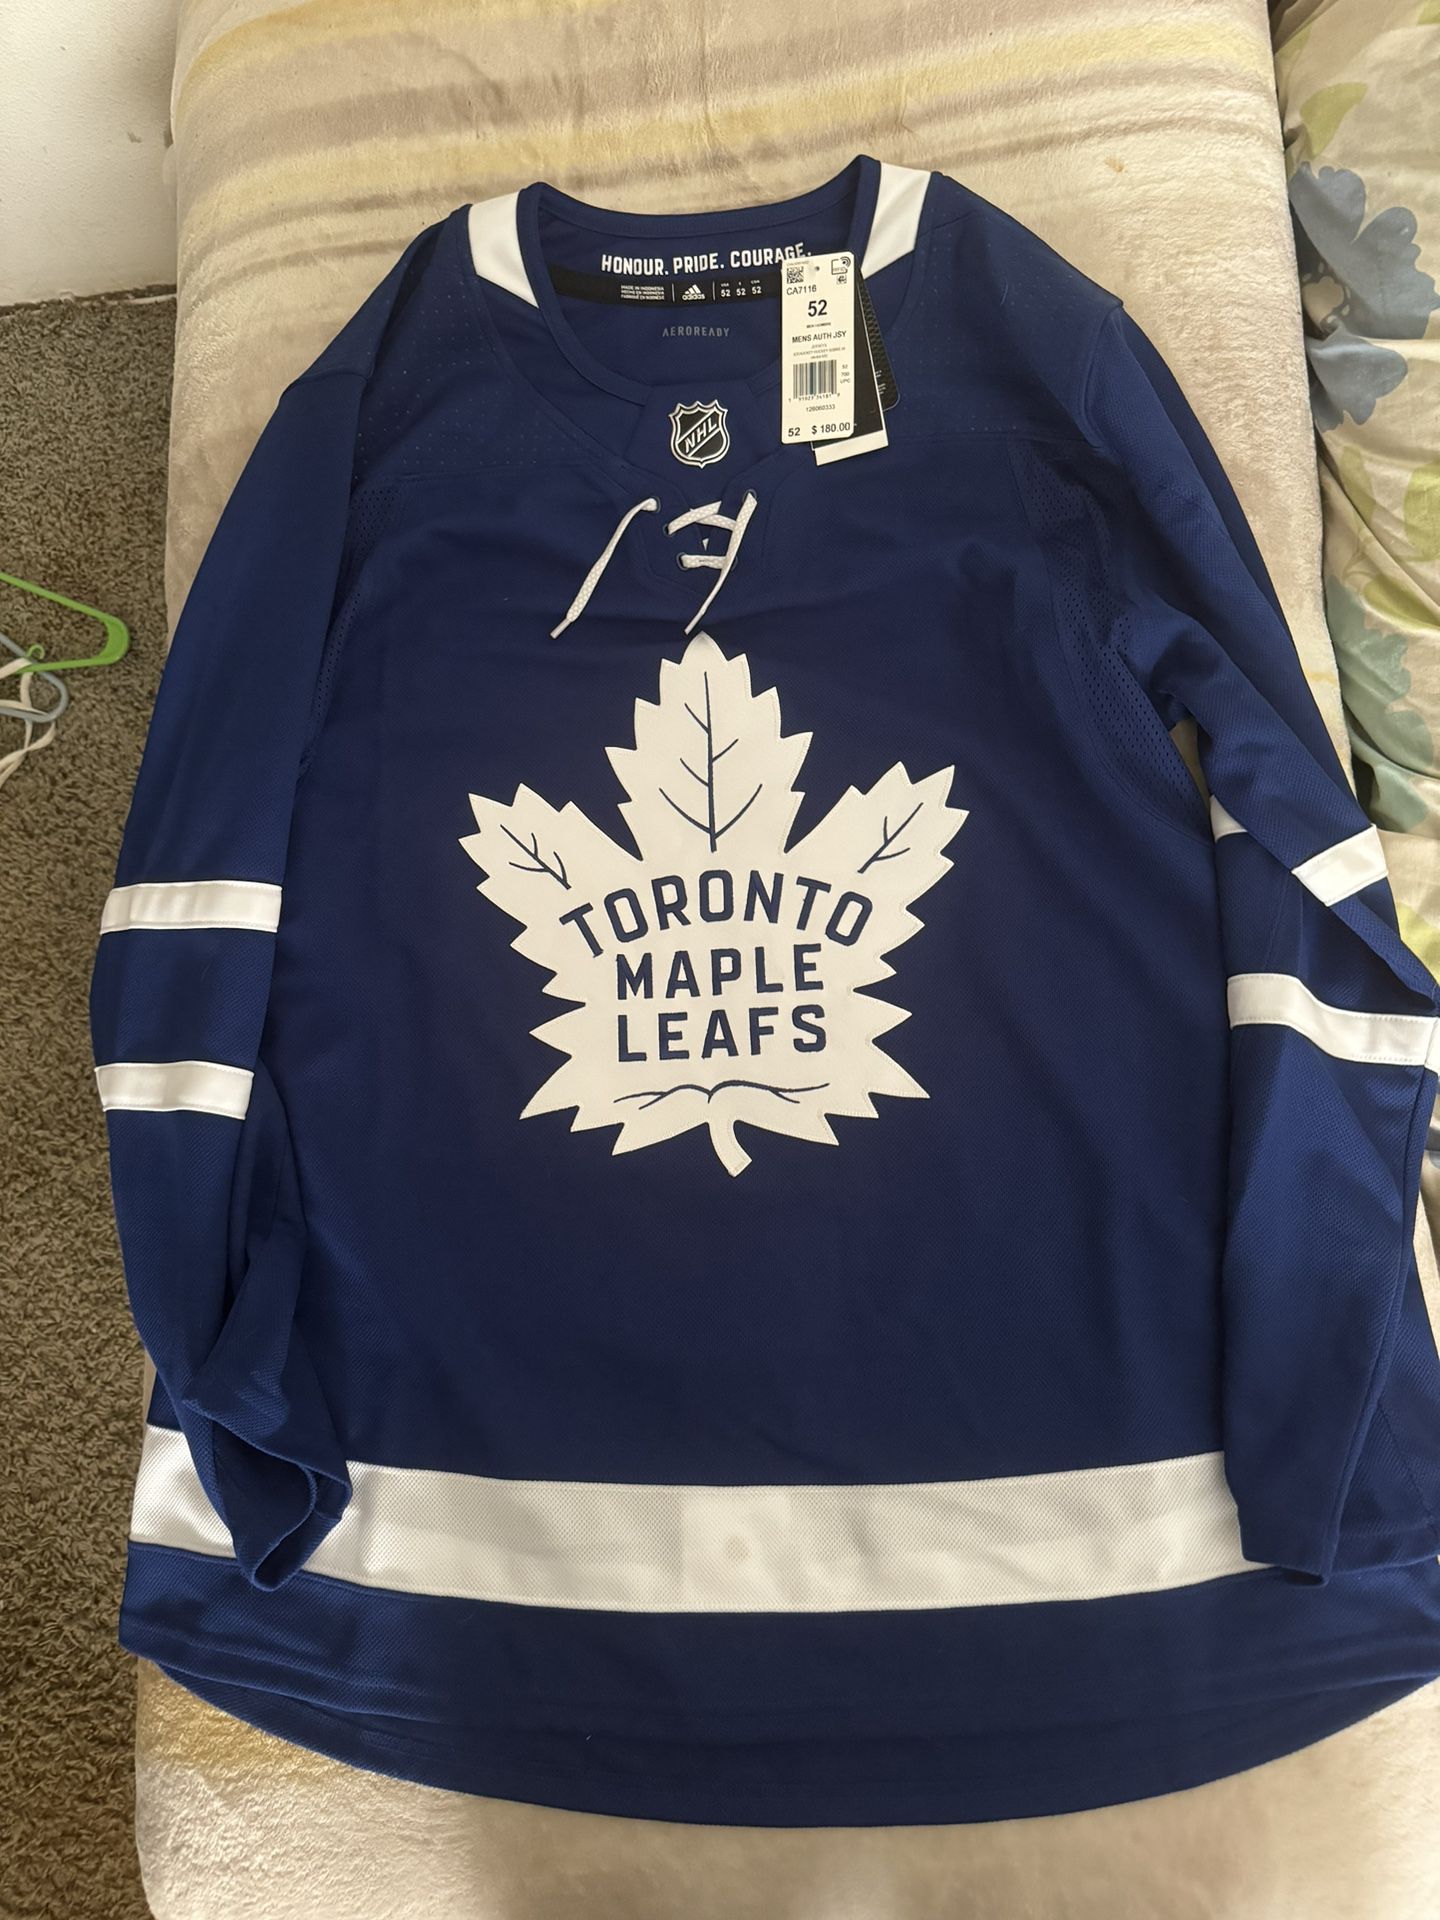 New Adidas Toronto Maple Leafs Hockey Jersey Size 52